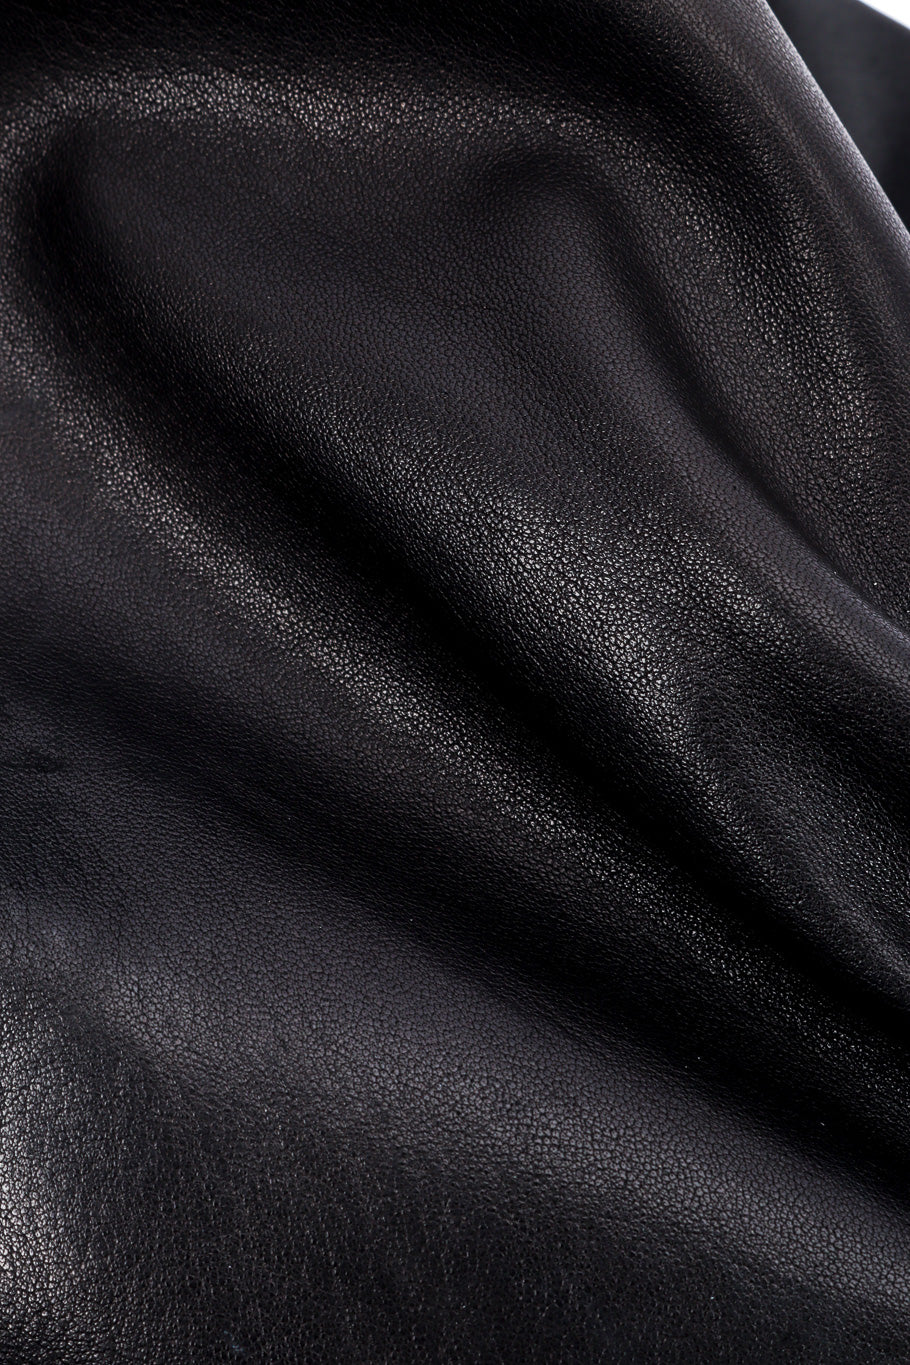 Vintage Charles Jourdan Leather Rhinestone Jacket leather closeup @recessla